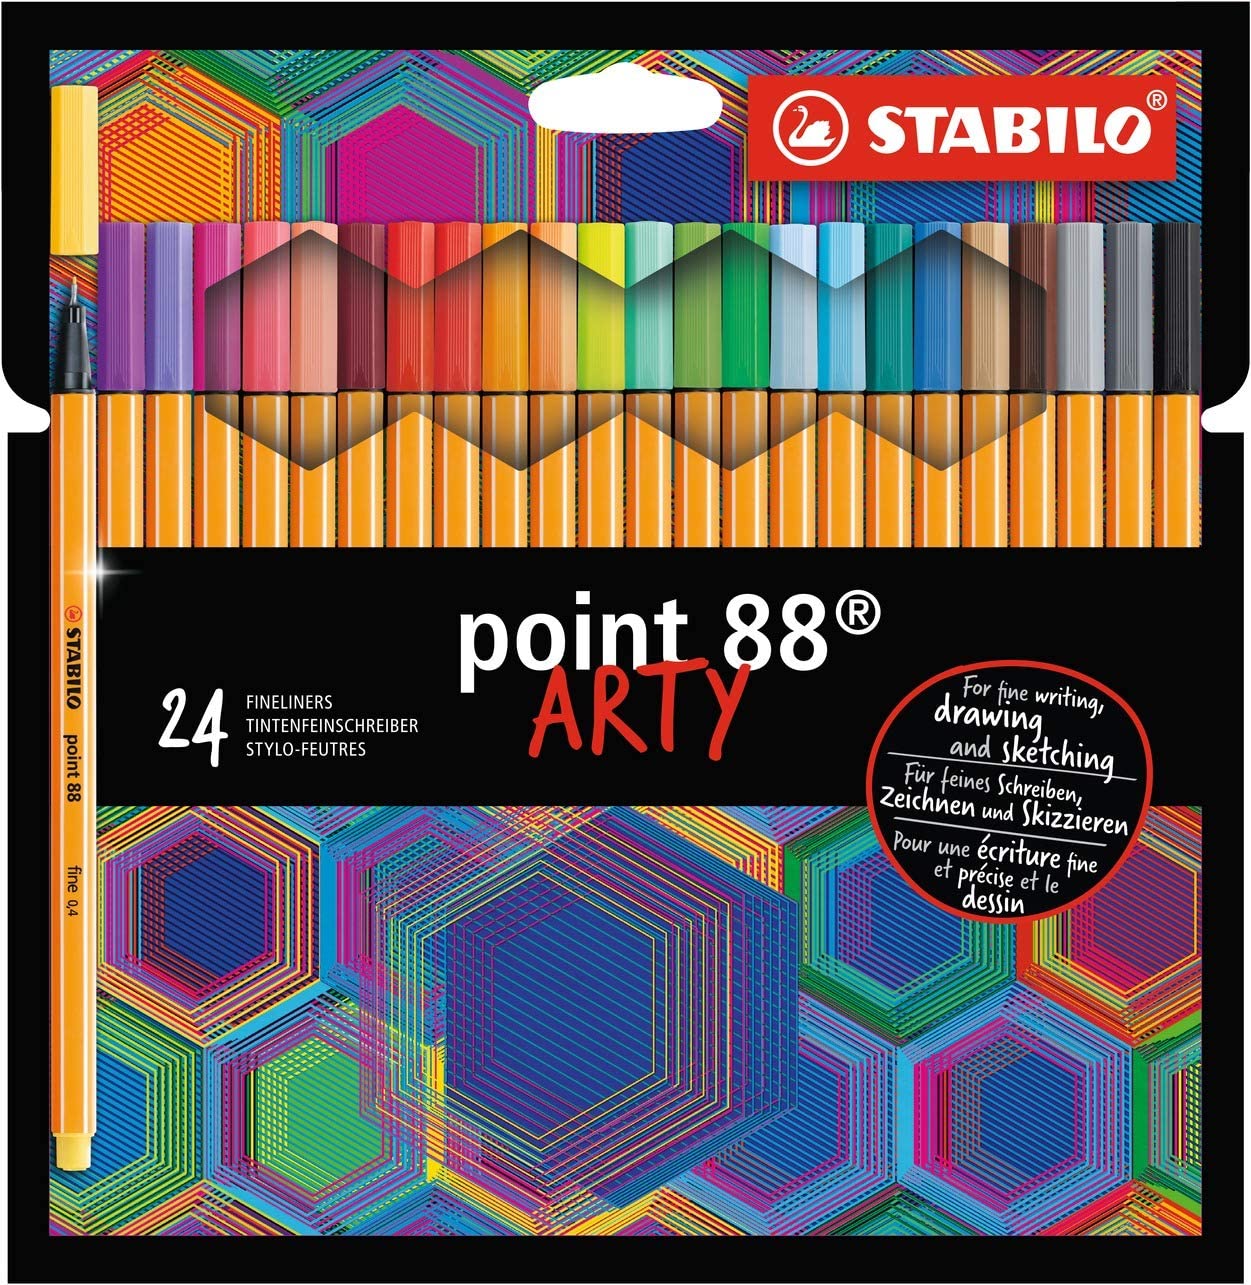 Tintes pildspalvu komplekts STABILO Point 88 ARTY|24 krāsas